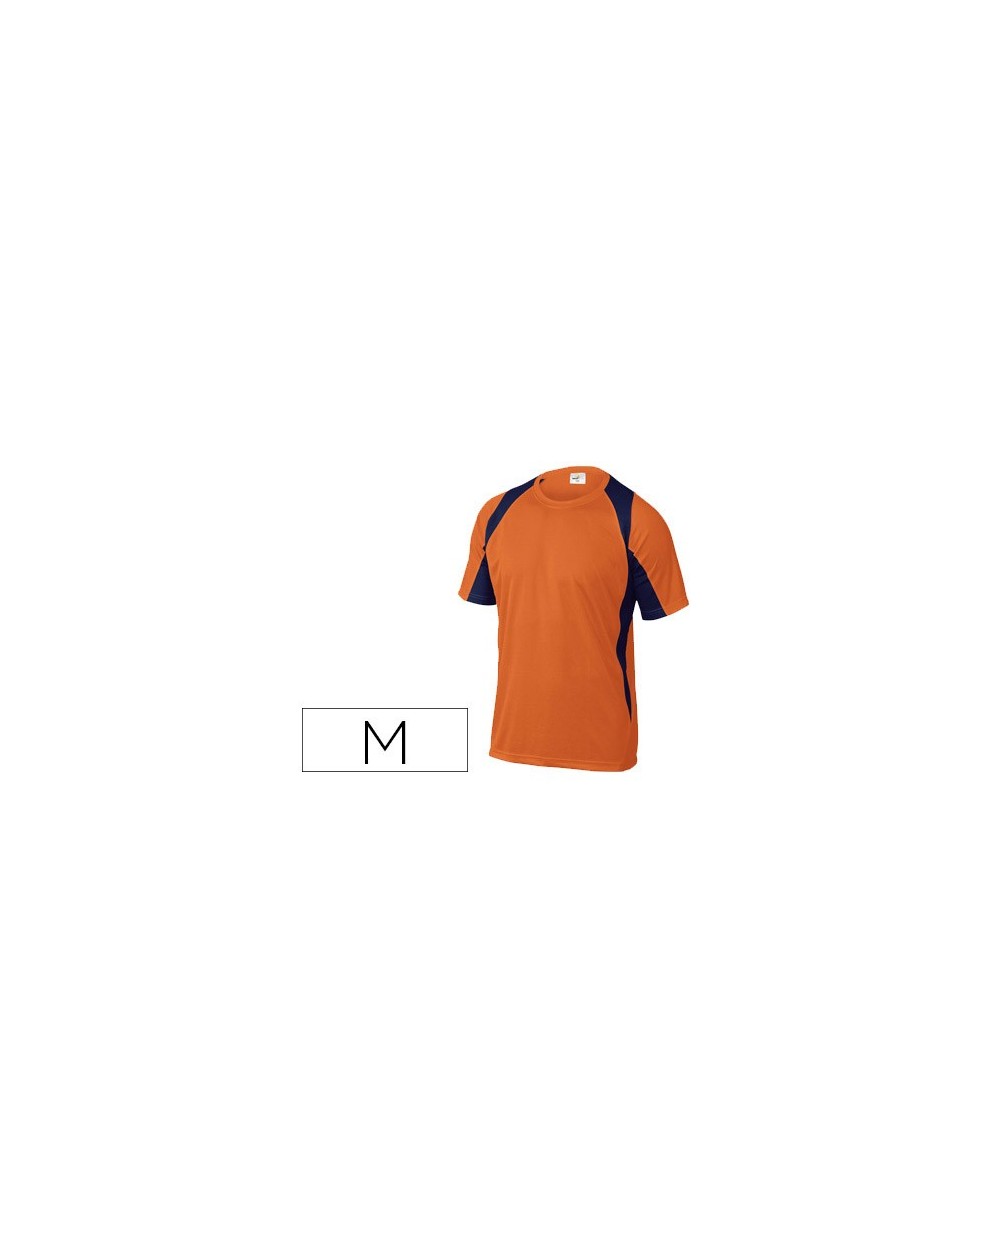 Camiseta deltaplus poliester manga corta cuello redondo tratamiento secado rapido color naranja marino talla m